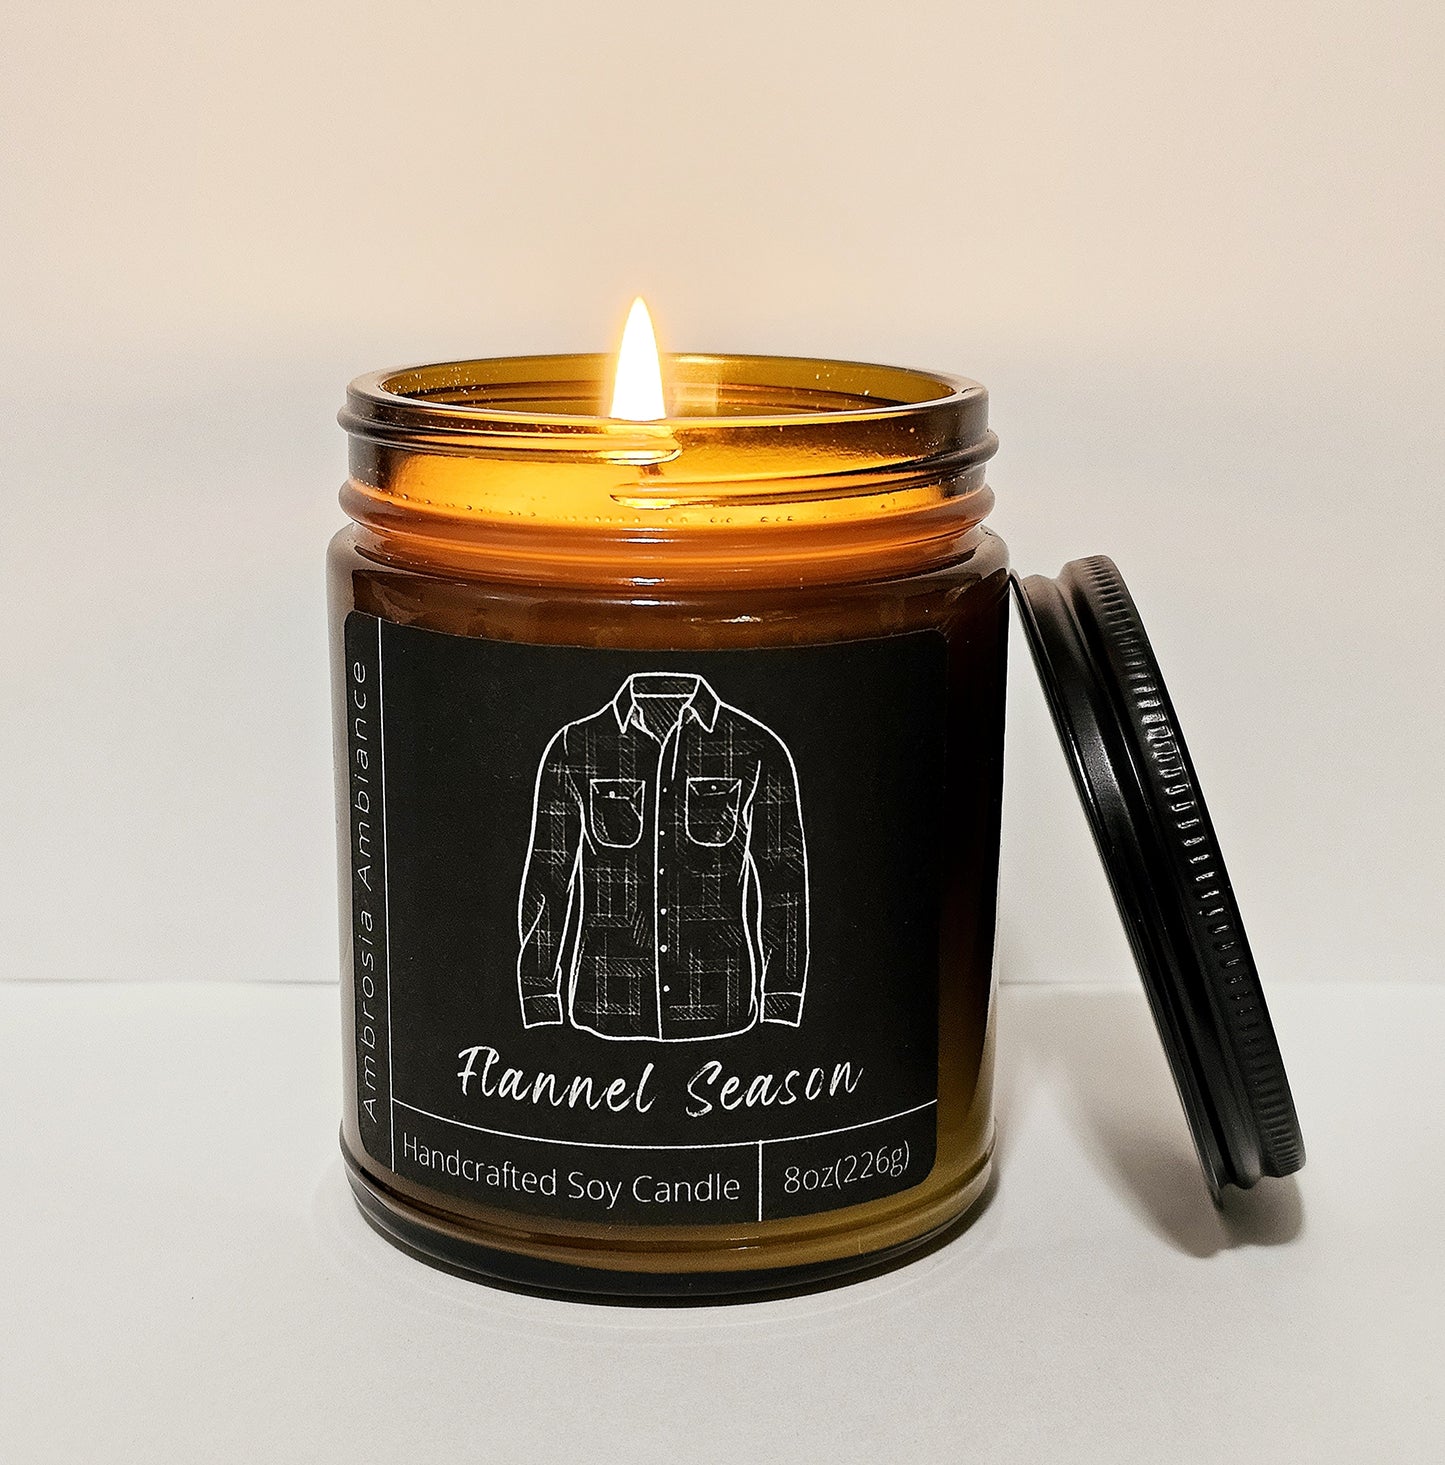 Flannel Season | Soy Wax Candle